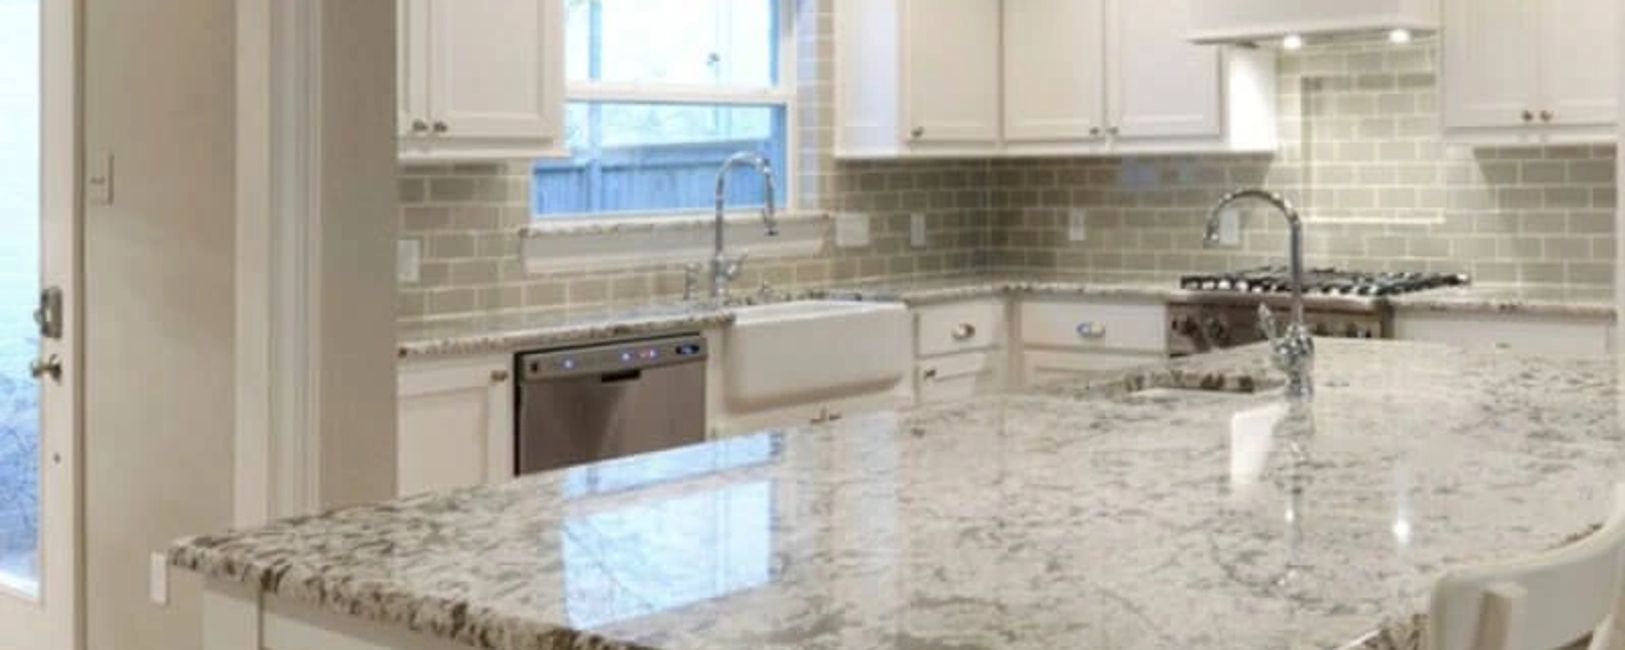 Granite clean seal polish countertops kitchen chip repair edge seam refinish resurface shiny stains